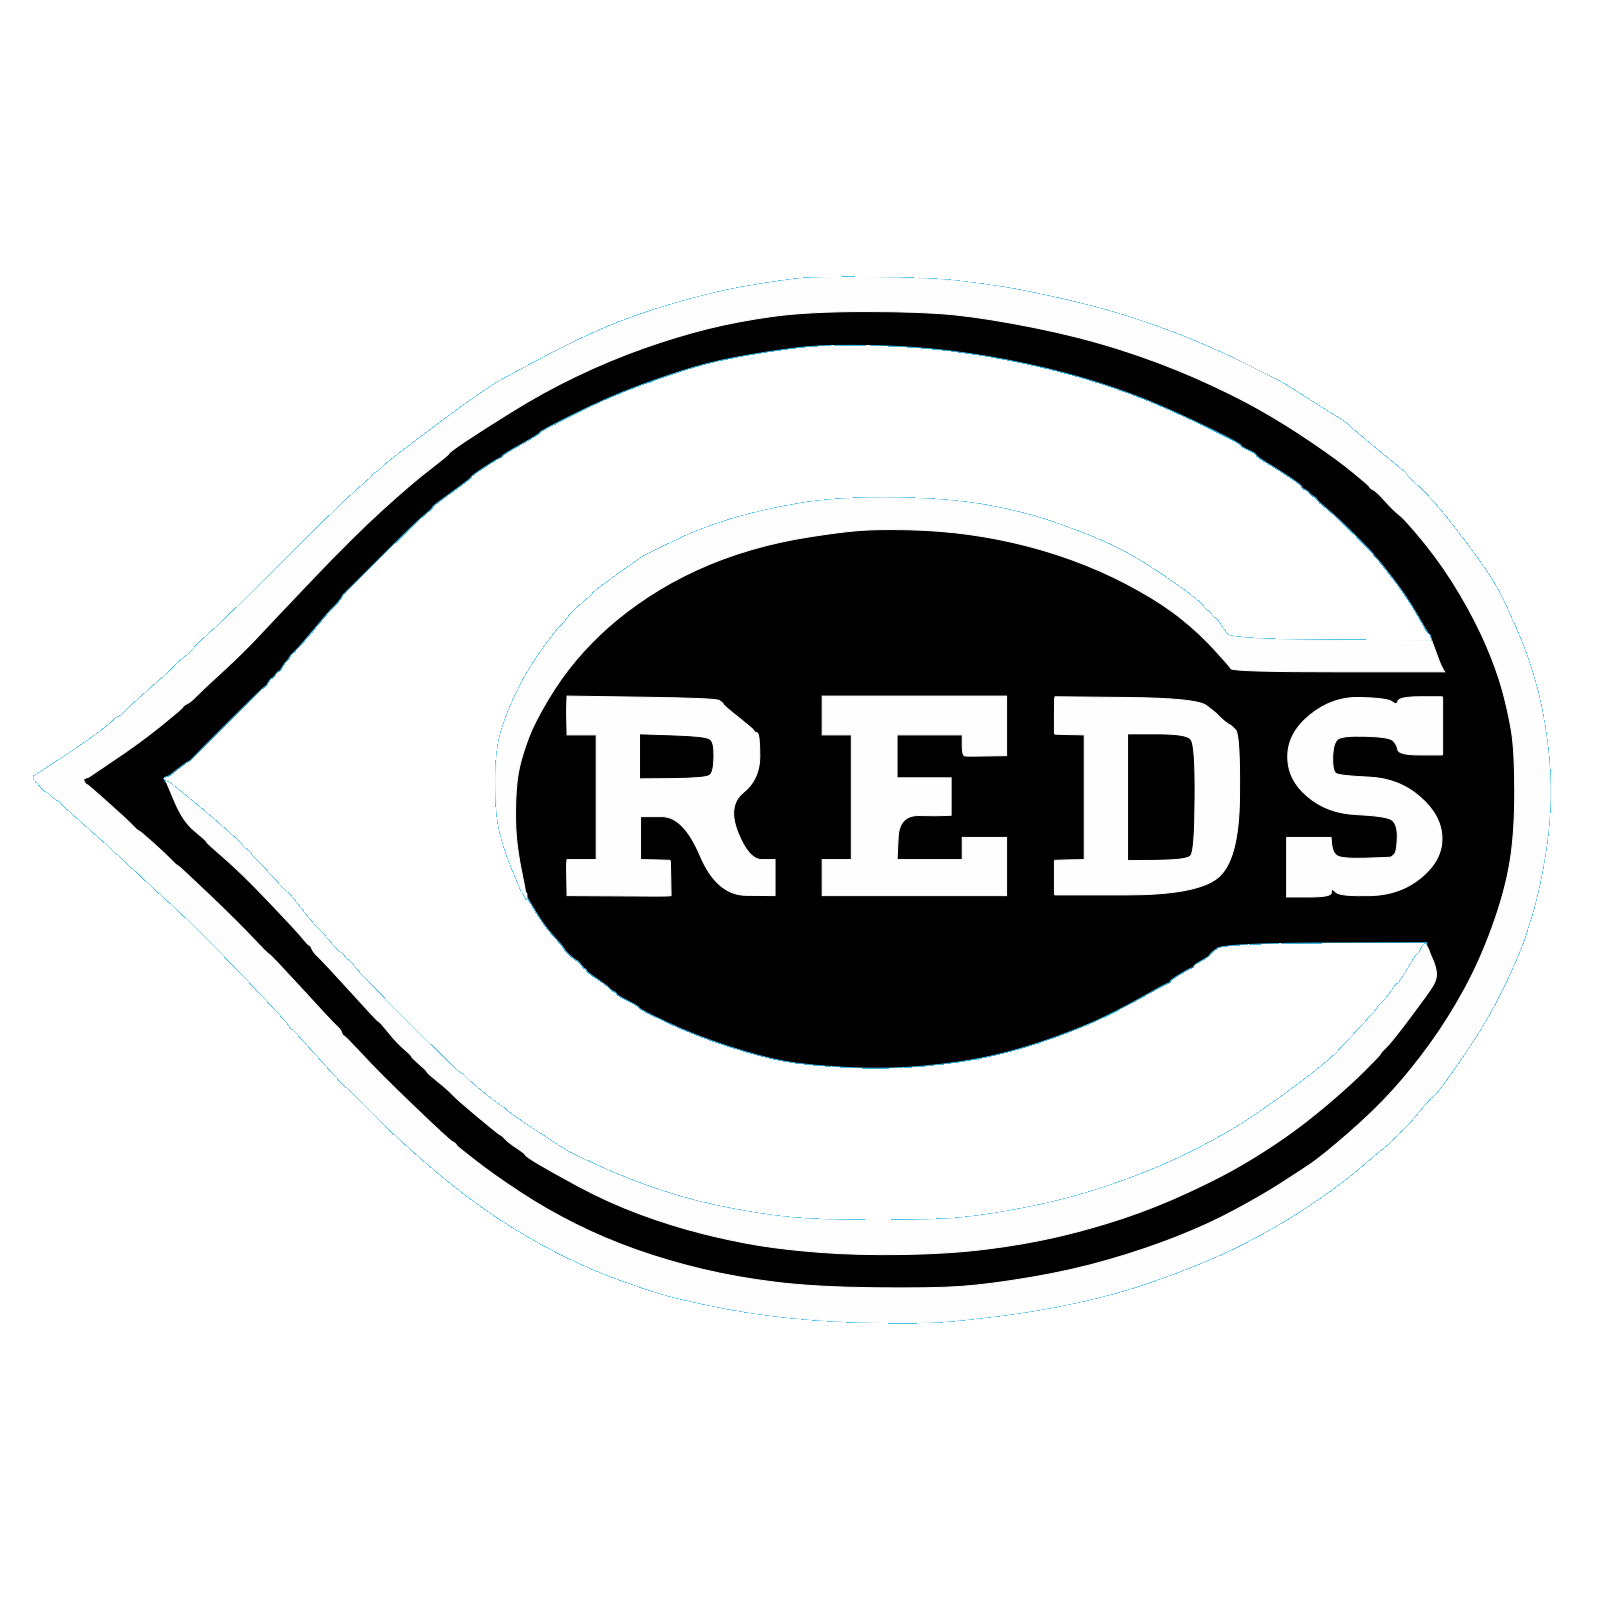 Cincinnati Reds Logo PNG Images Transparent Background | PNG Play